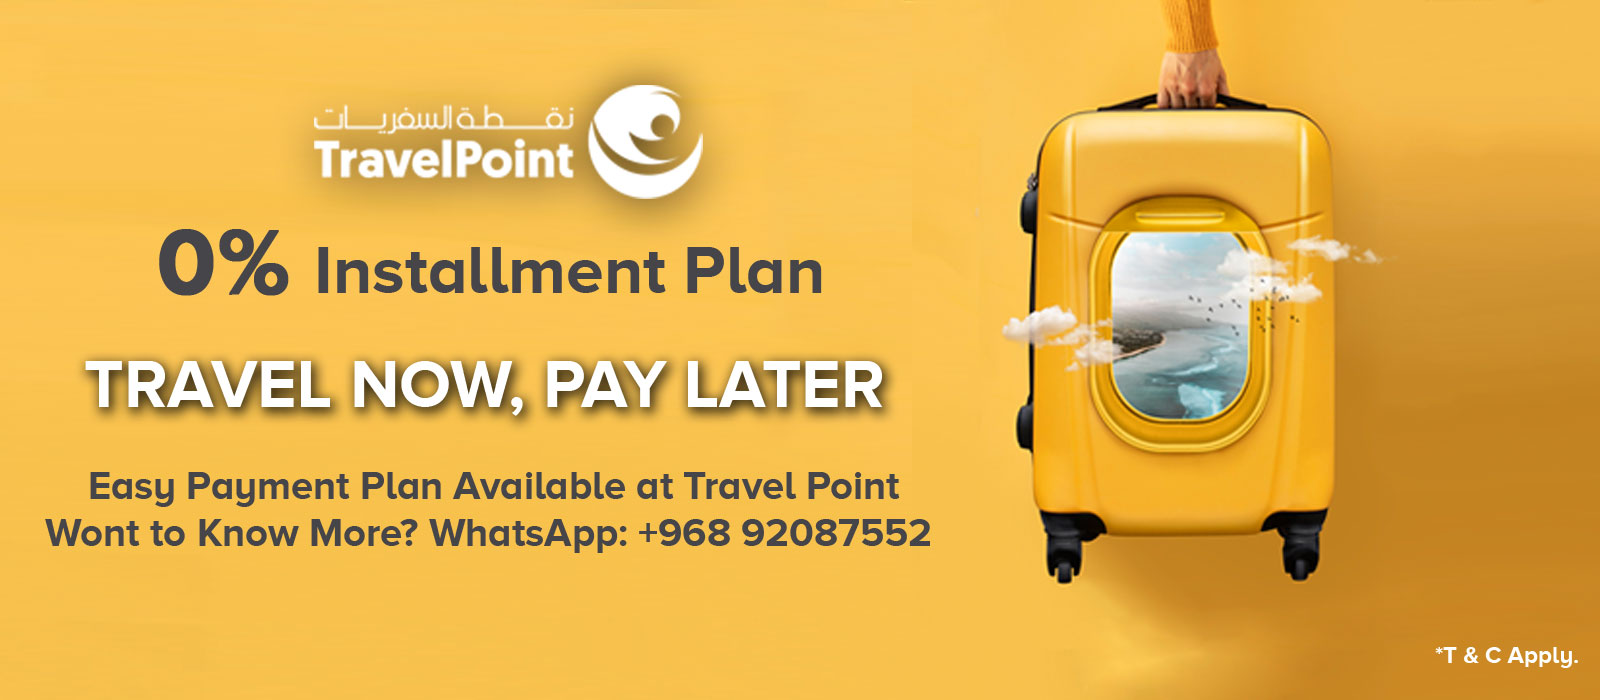 Travelpoint:Travelpoint Offers